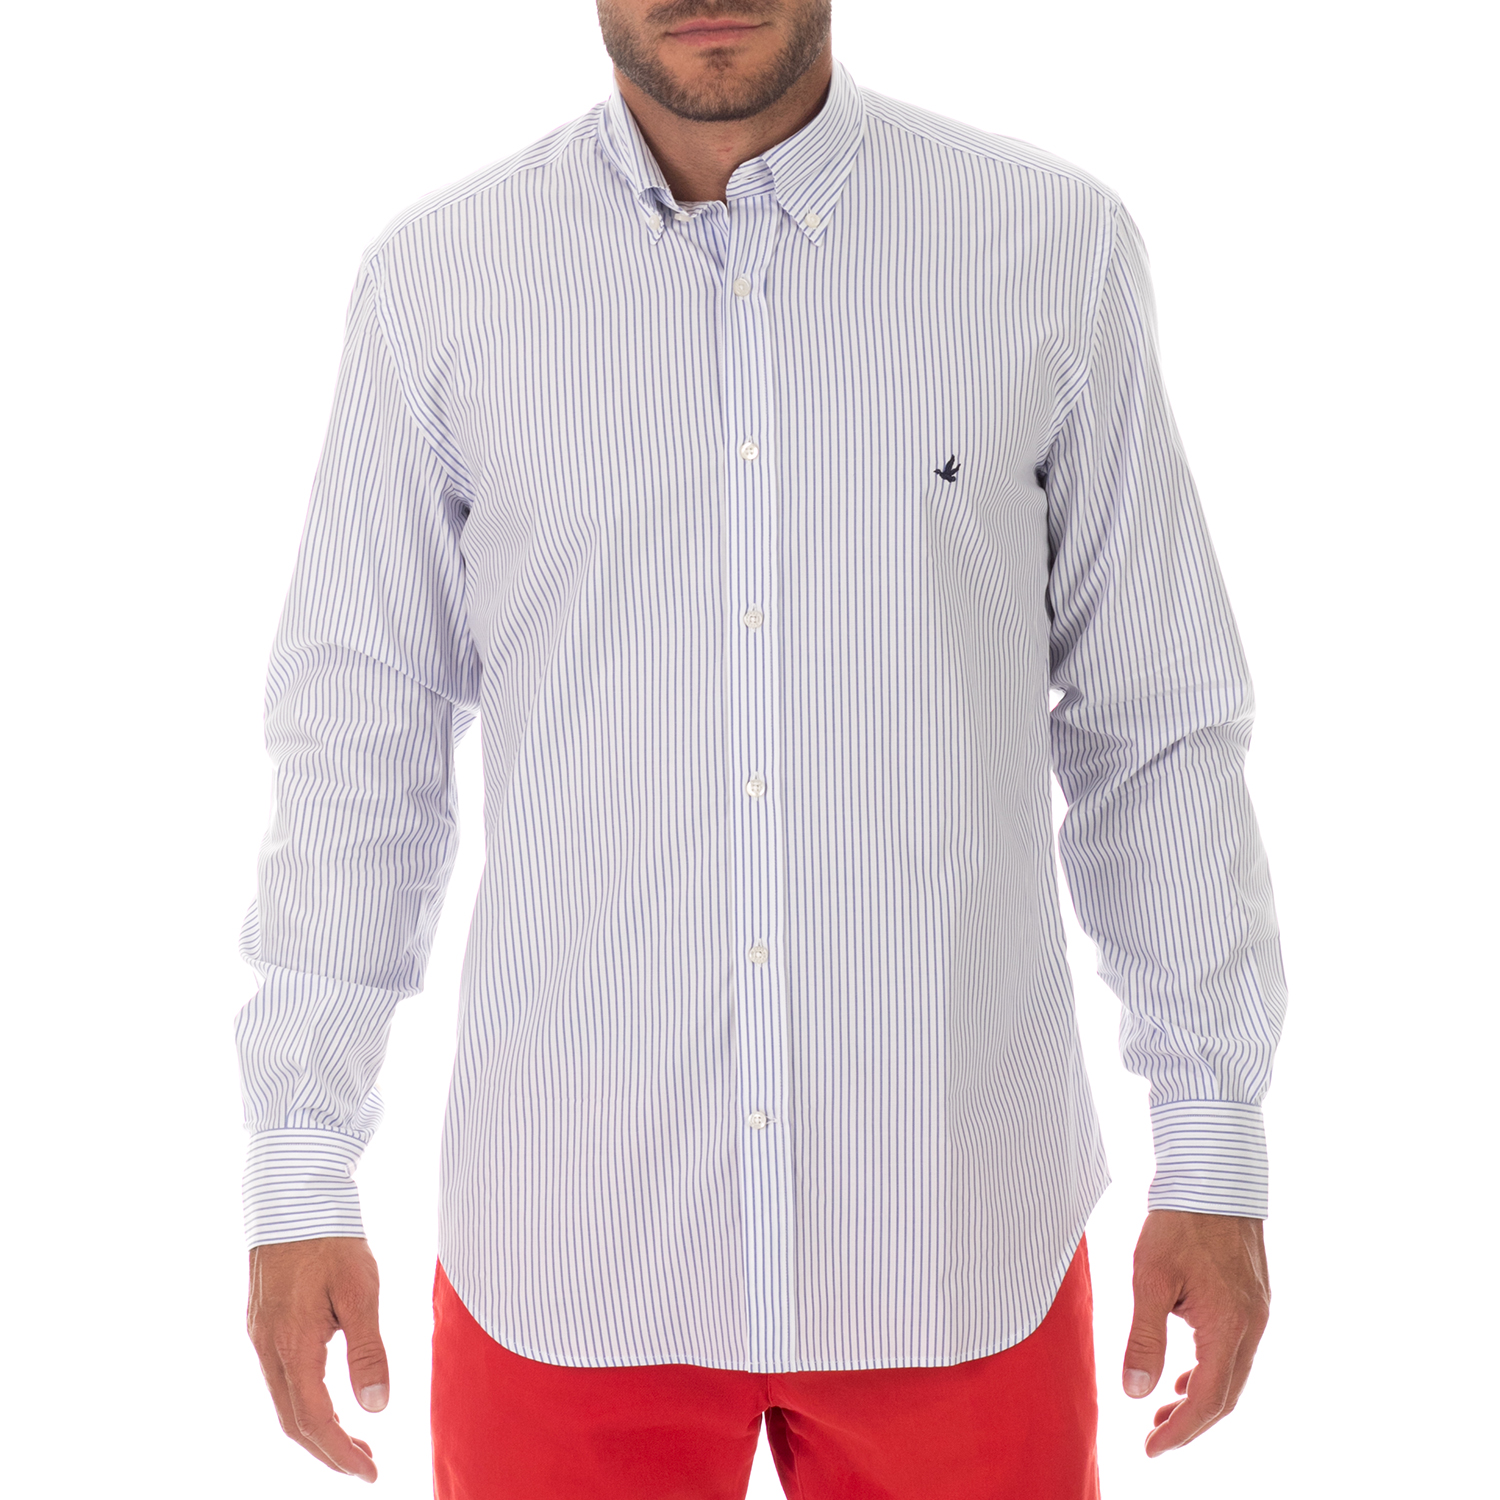 BROOKSFIELD - Ανδρικό πουκάμισο BROOKSFIELD SLIM FIT ριγέ λευκό μπλε Ανδρικά/Ρούχα/Πουκάμισα/Μακρυμάνικα